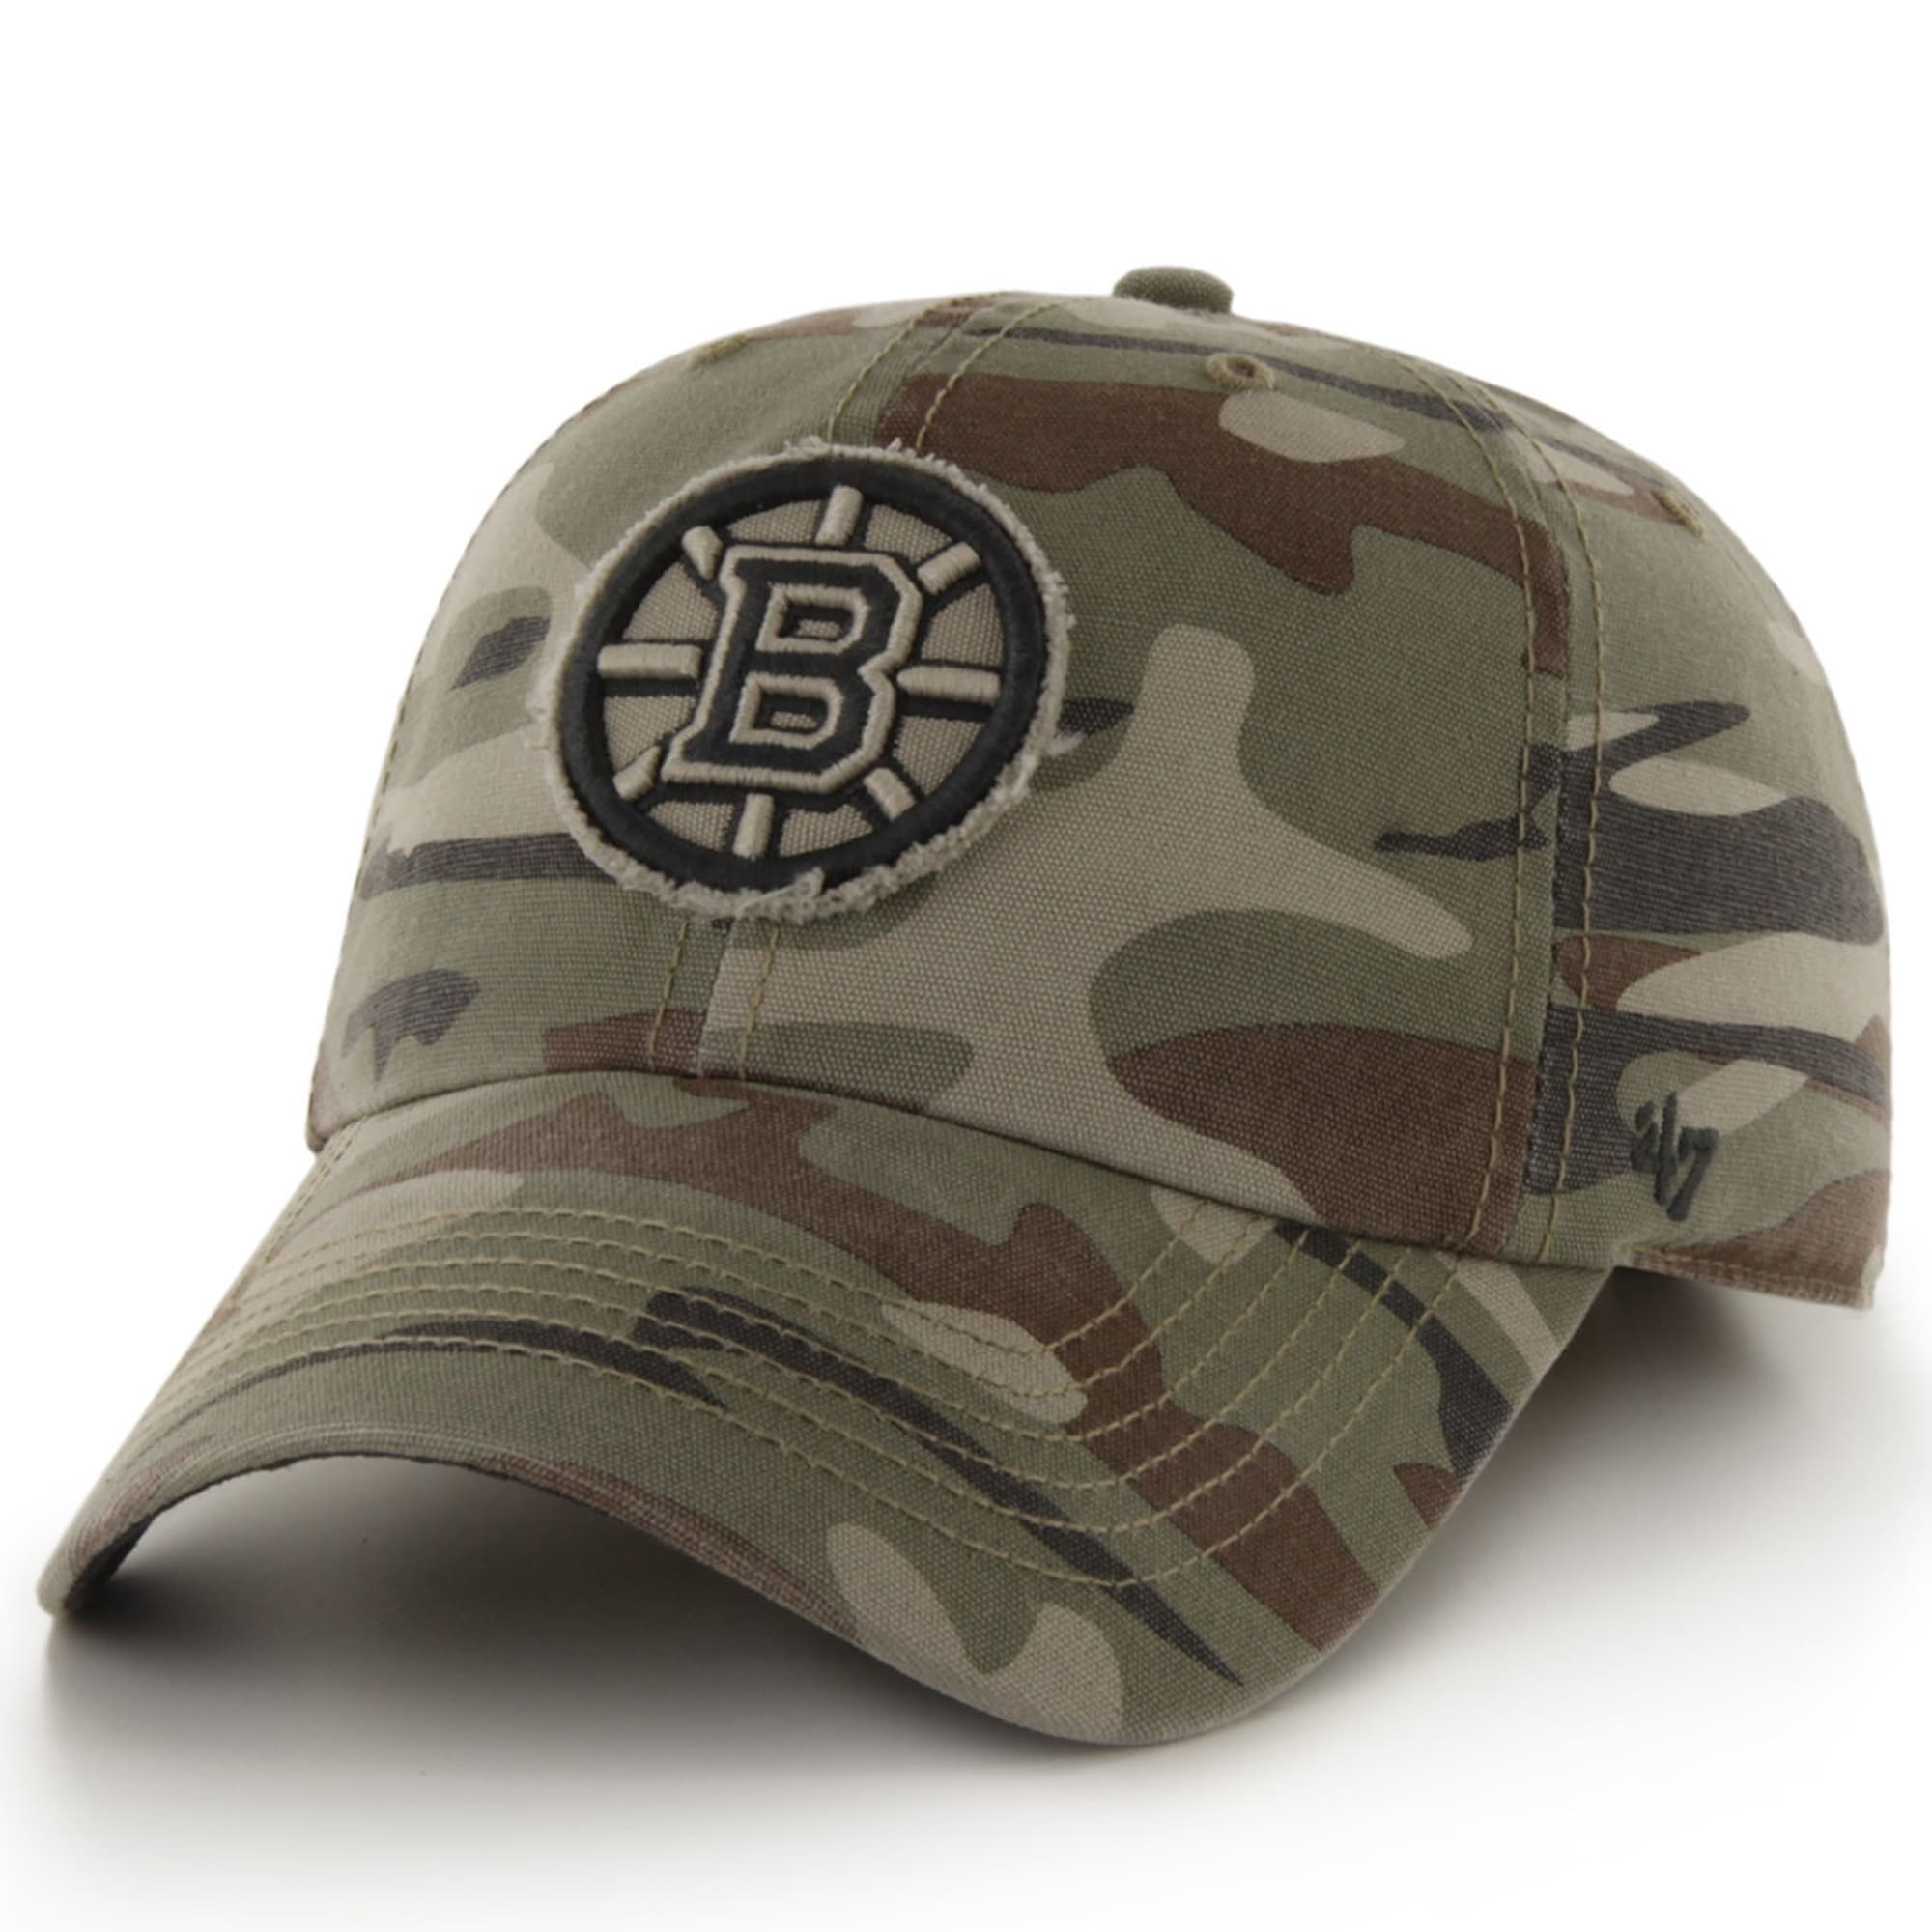 Boston Bruins Military US Army SGA Hat TD Bank Sponsor New Strapback adult  size